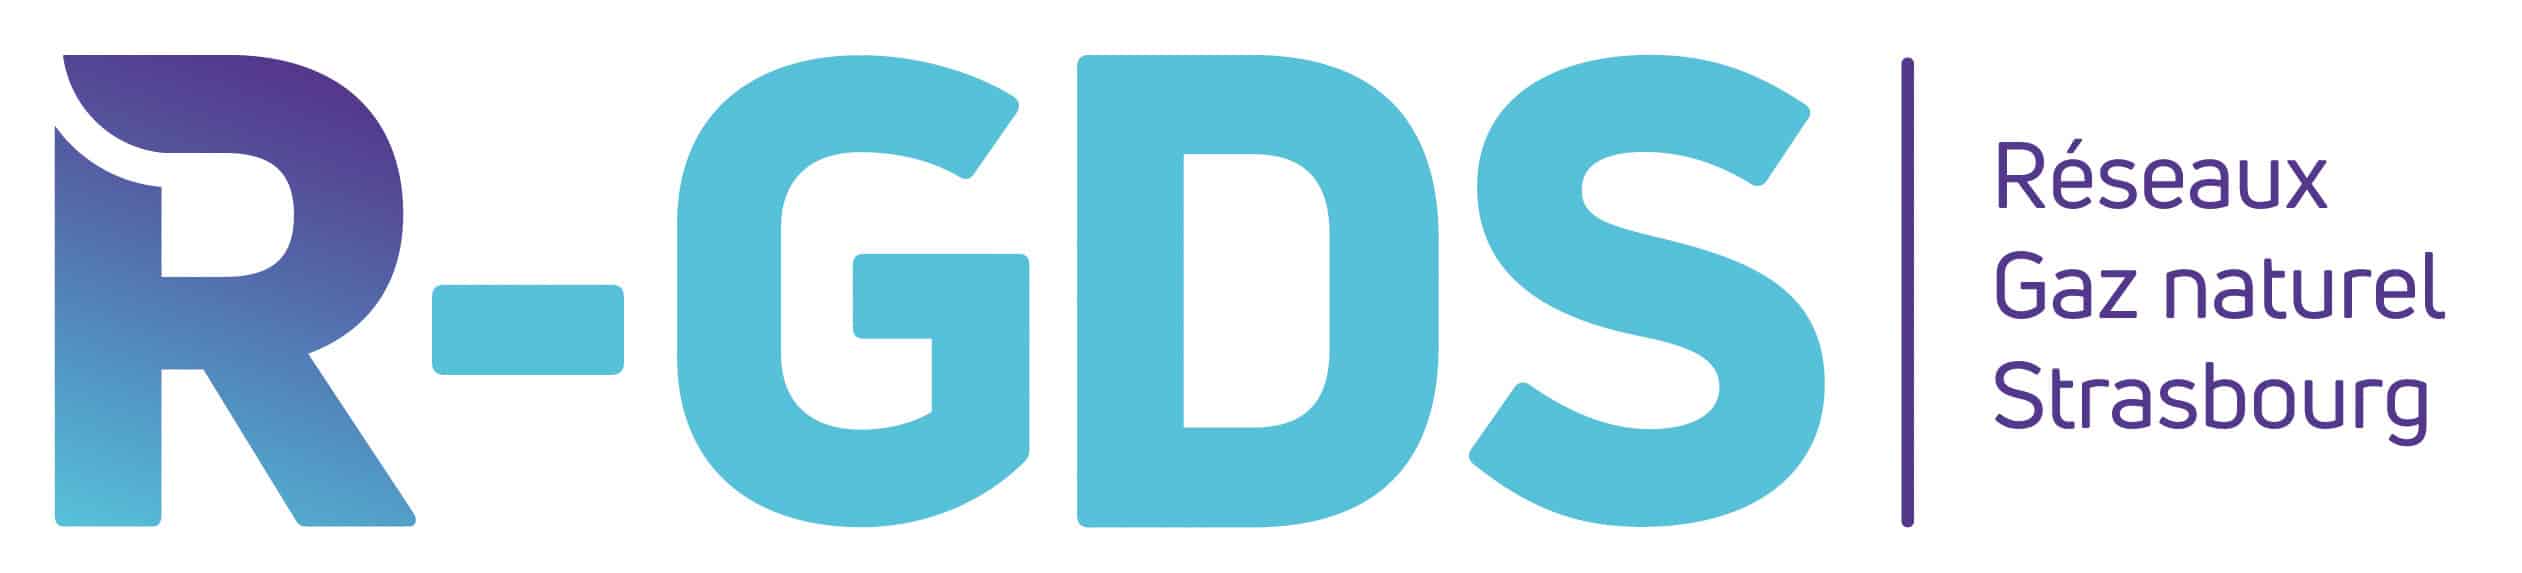 R-GDS